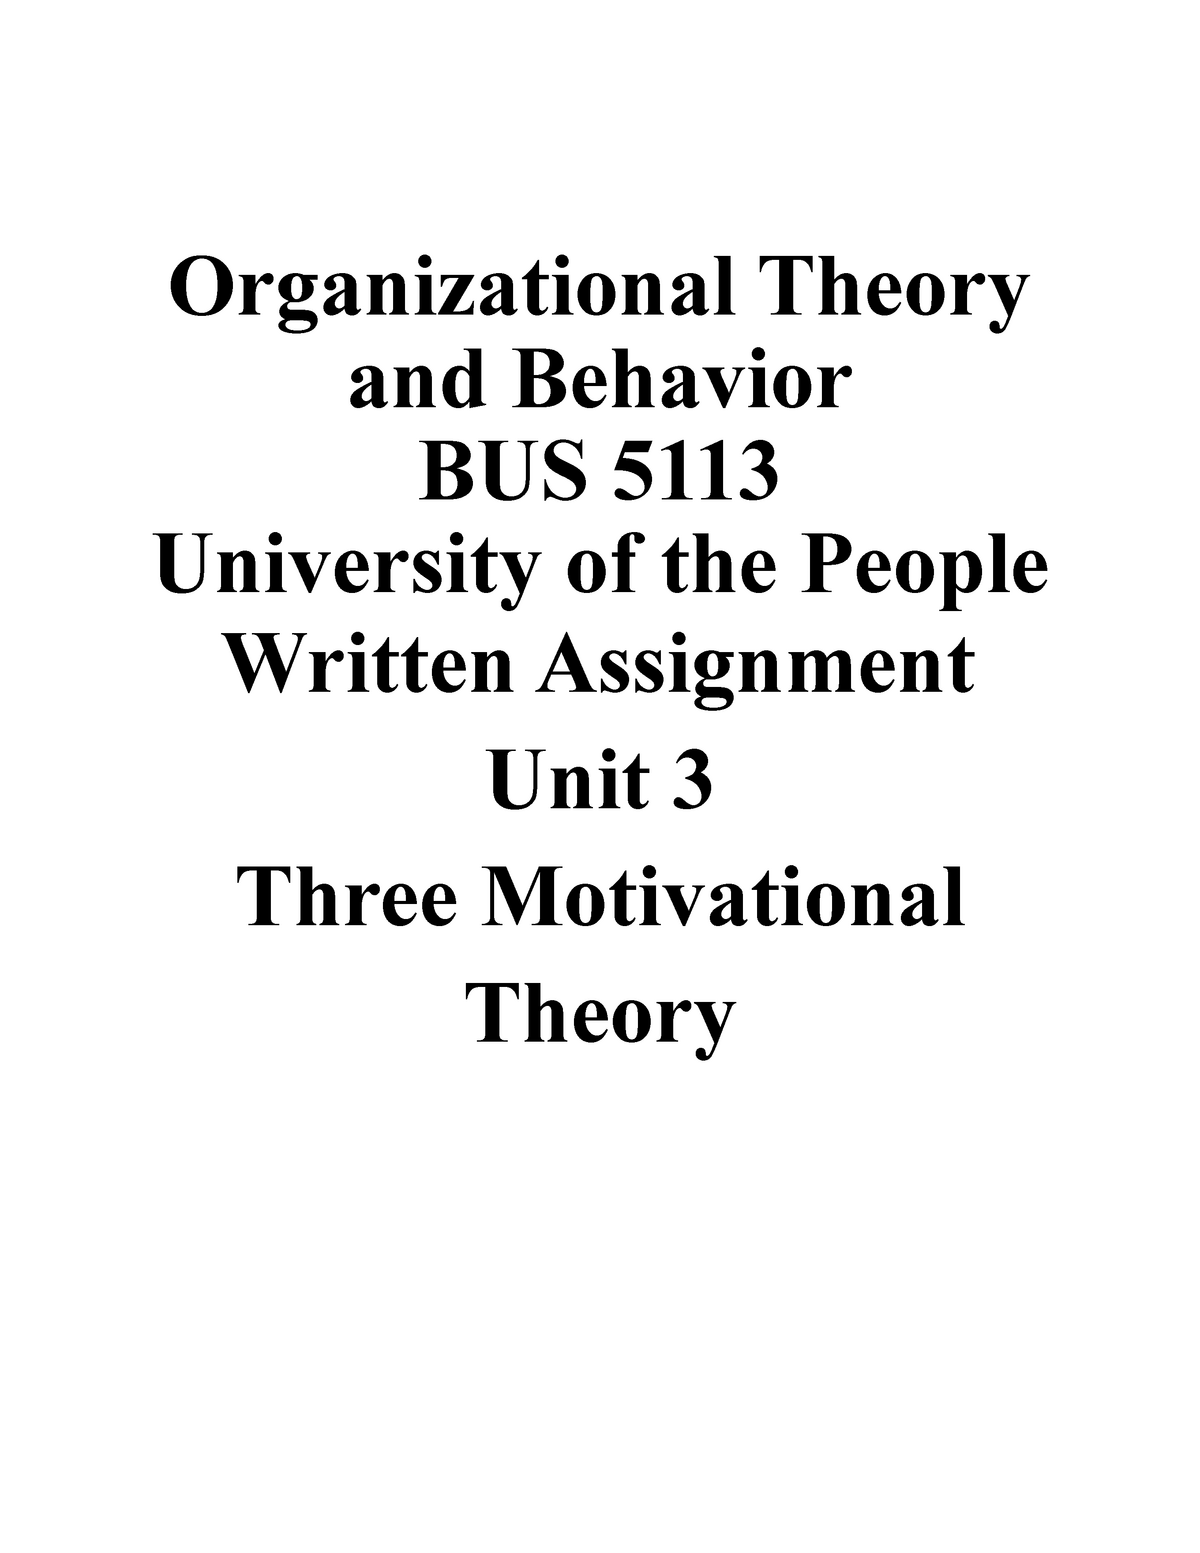 Organizational Theory and Behavior Unit 3 - Organizational Theory and ...